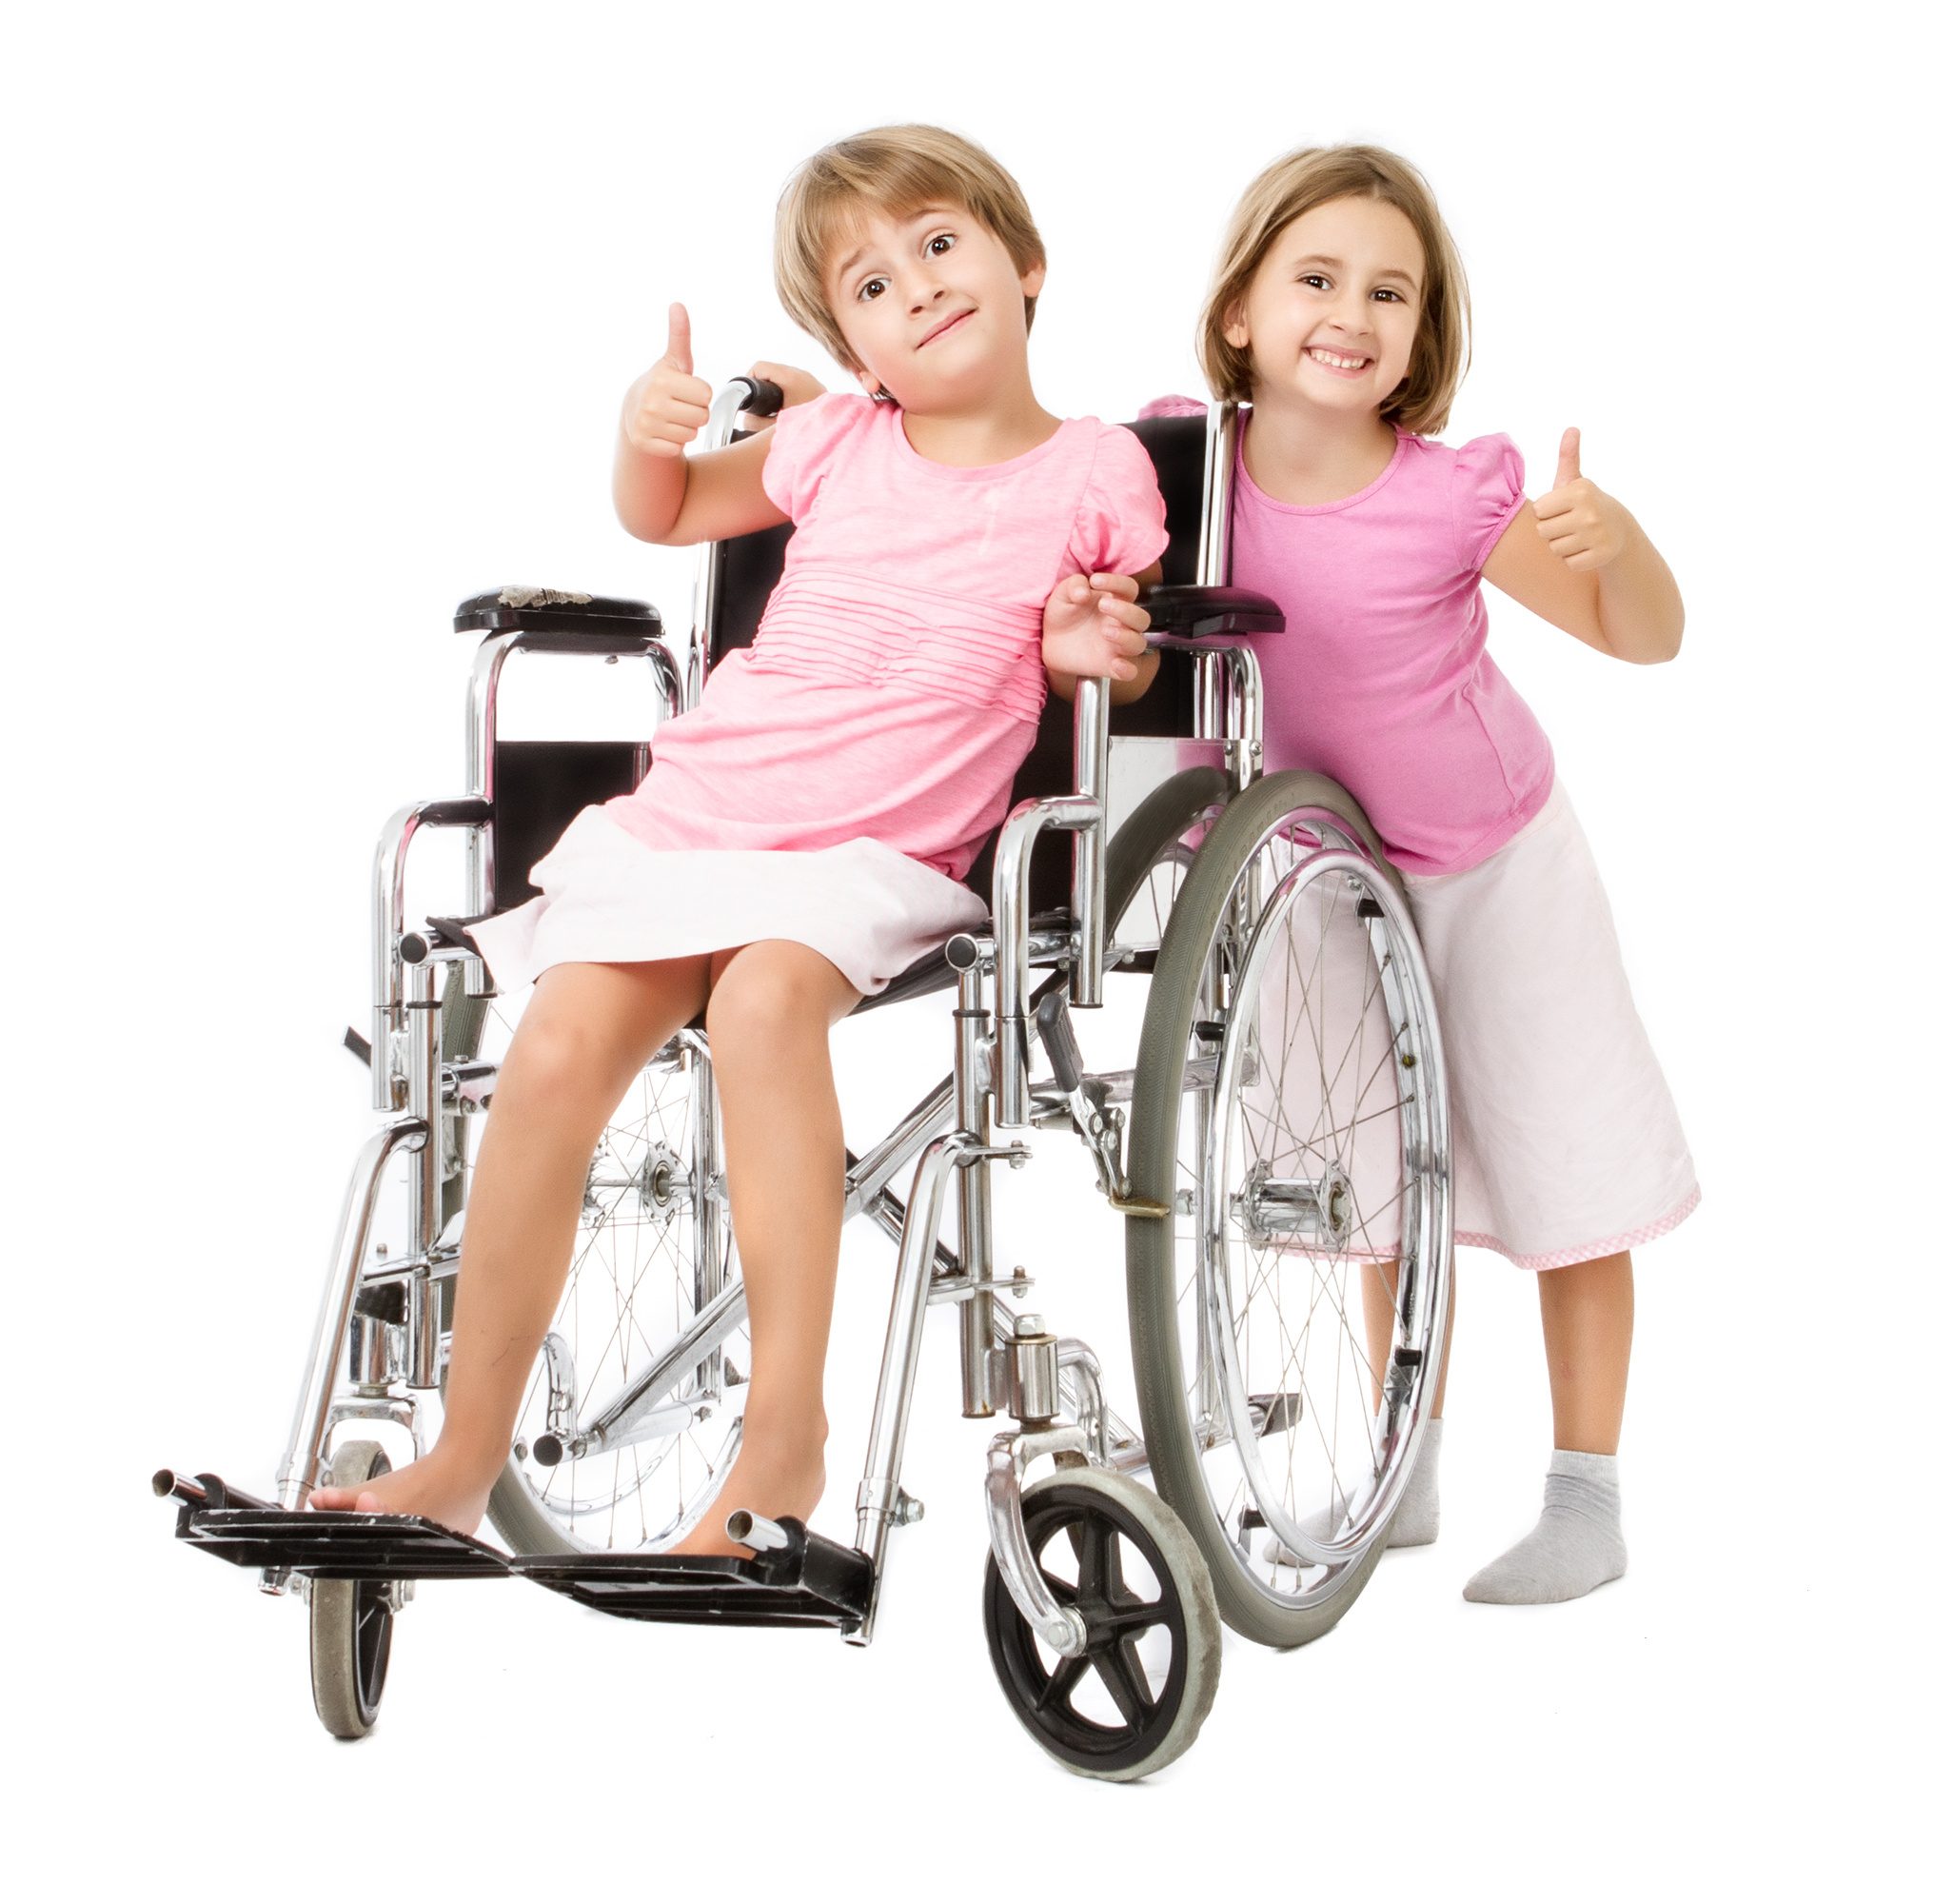 children handicap positive image